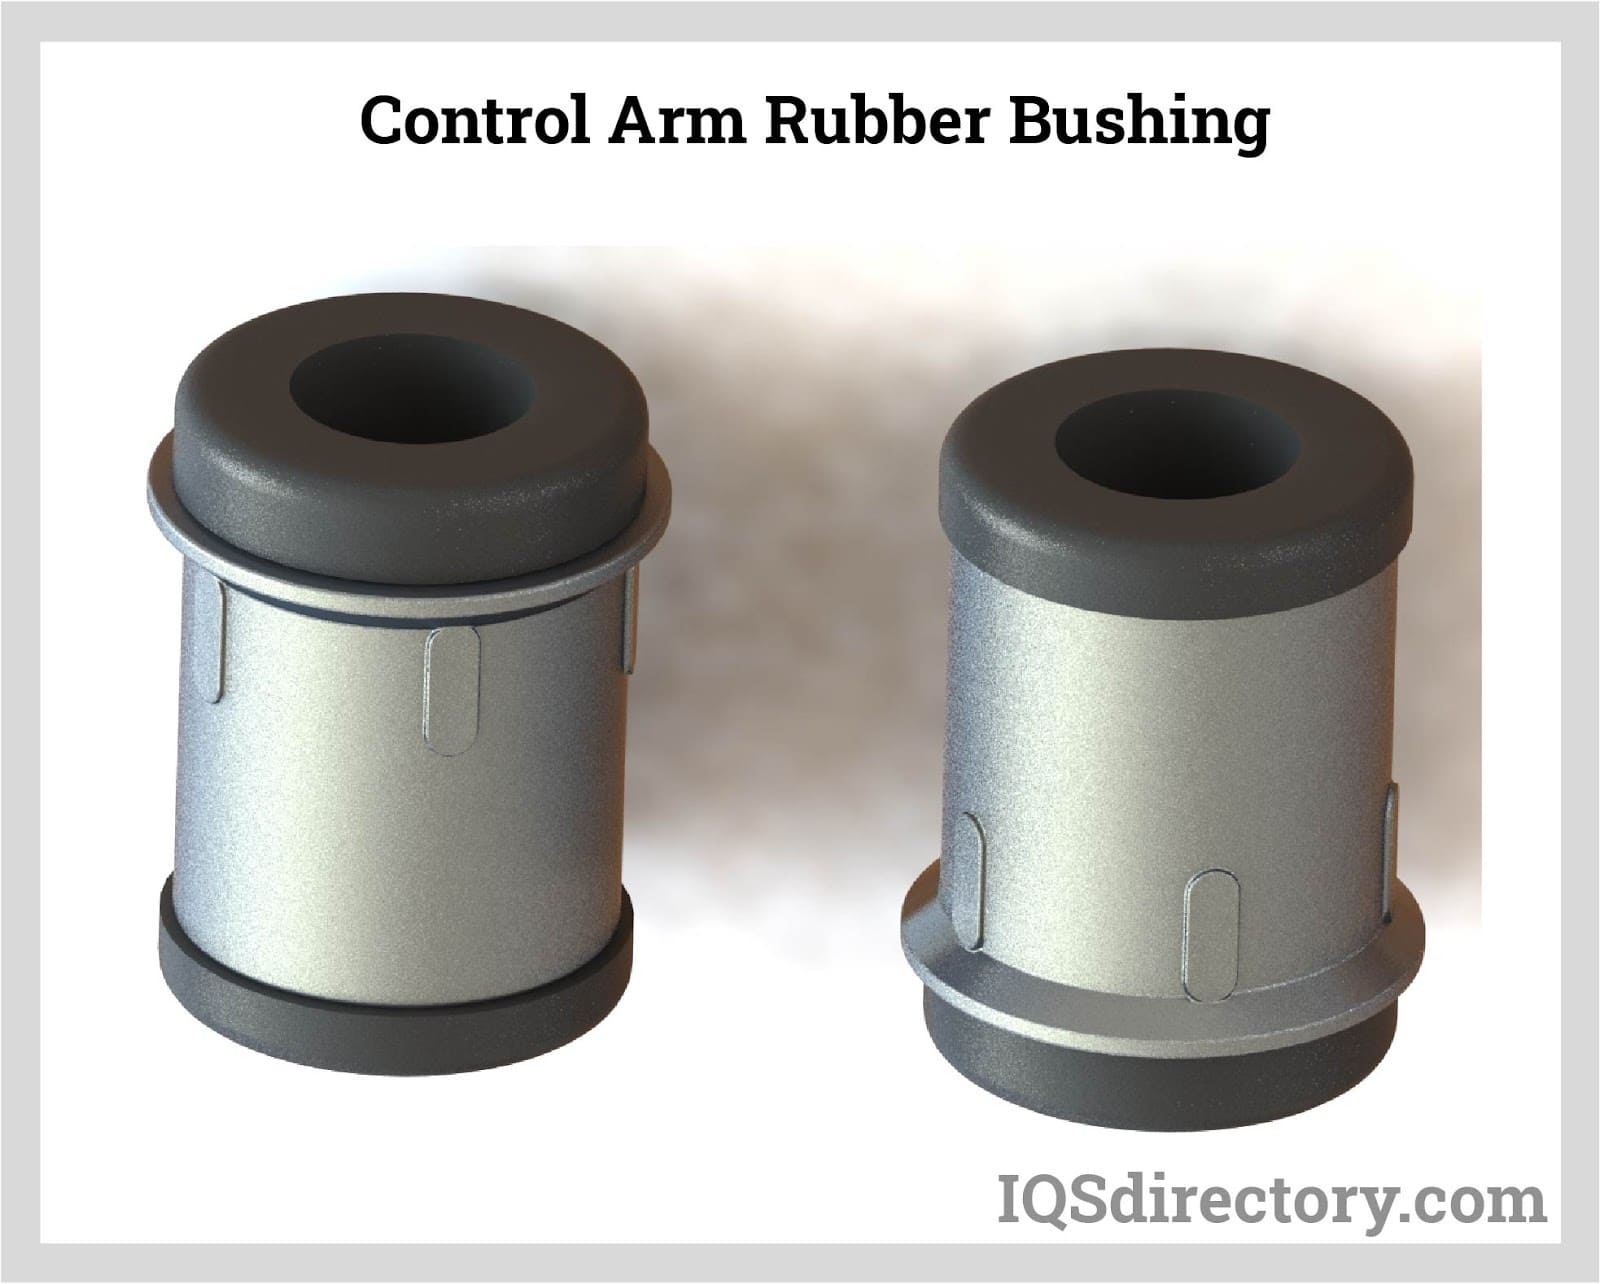 Control Arm Rubber Bushing